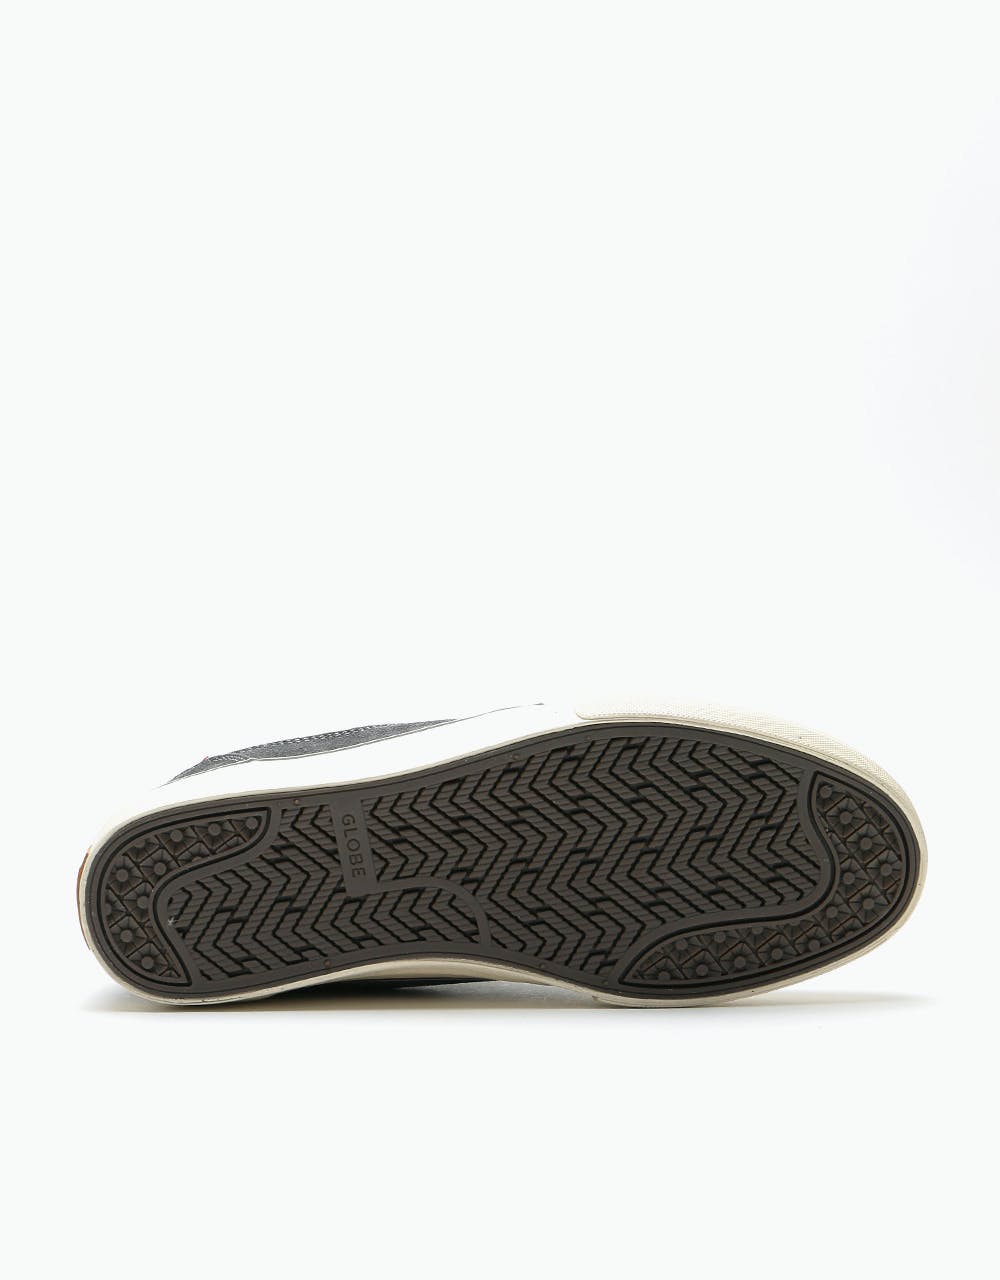 Globe Mahalo Skate Shoes - Dark Shadow/Antique White